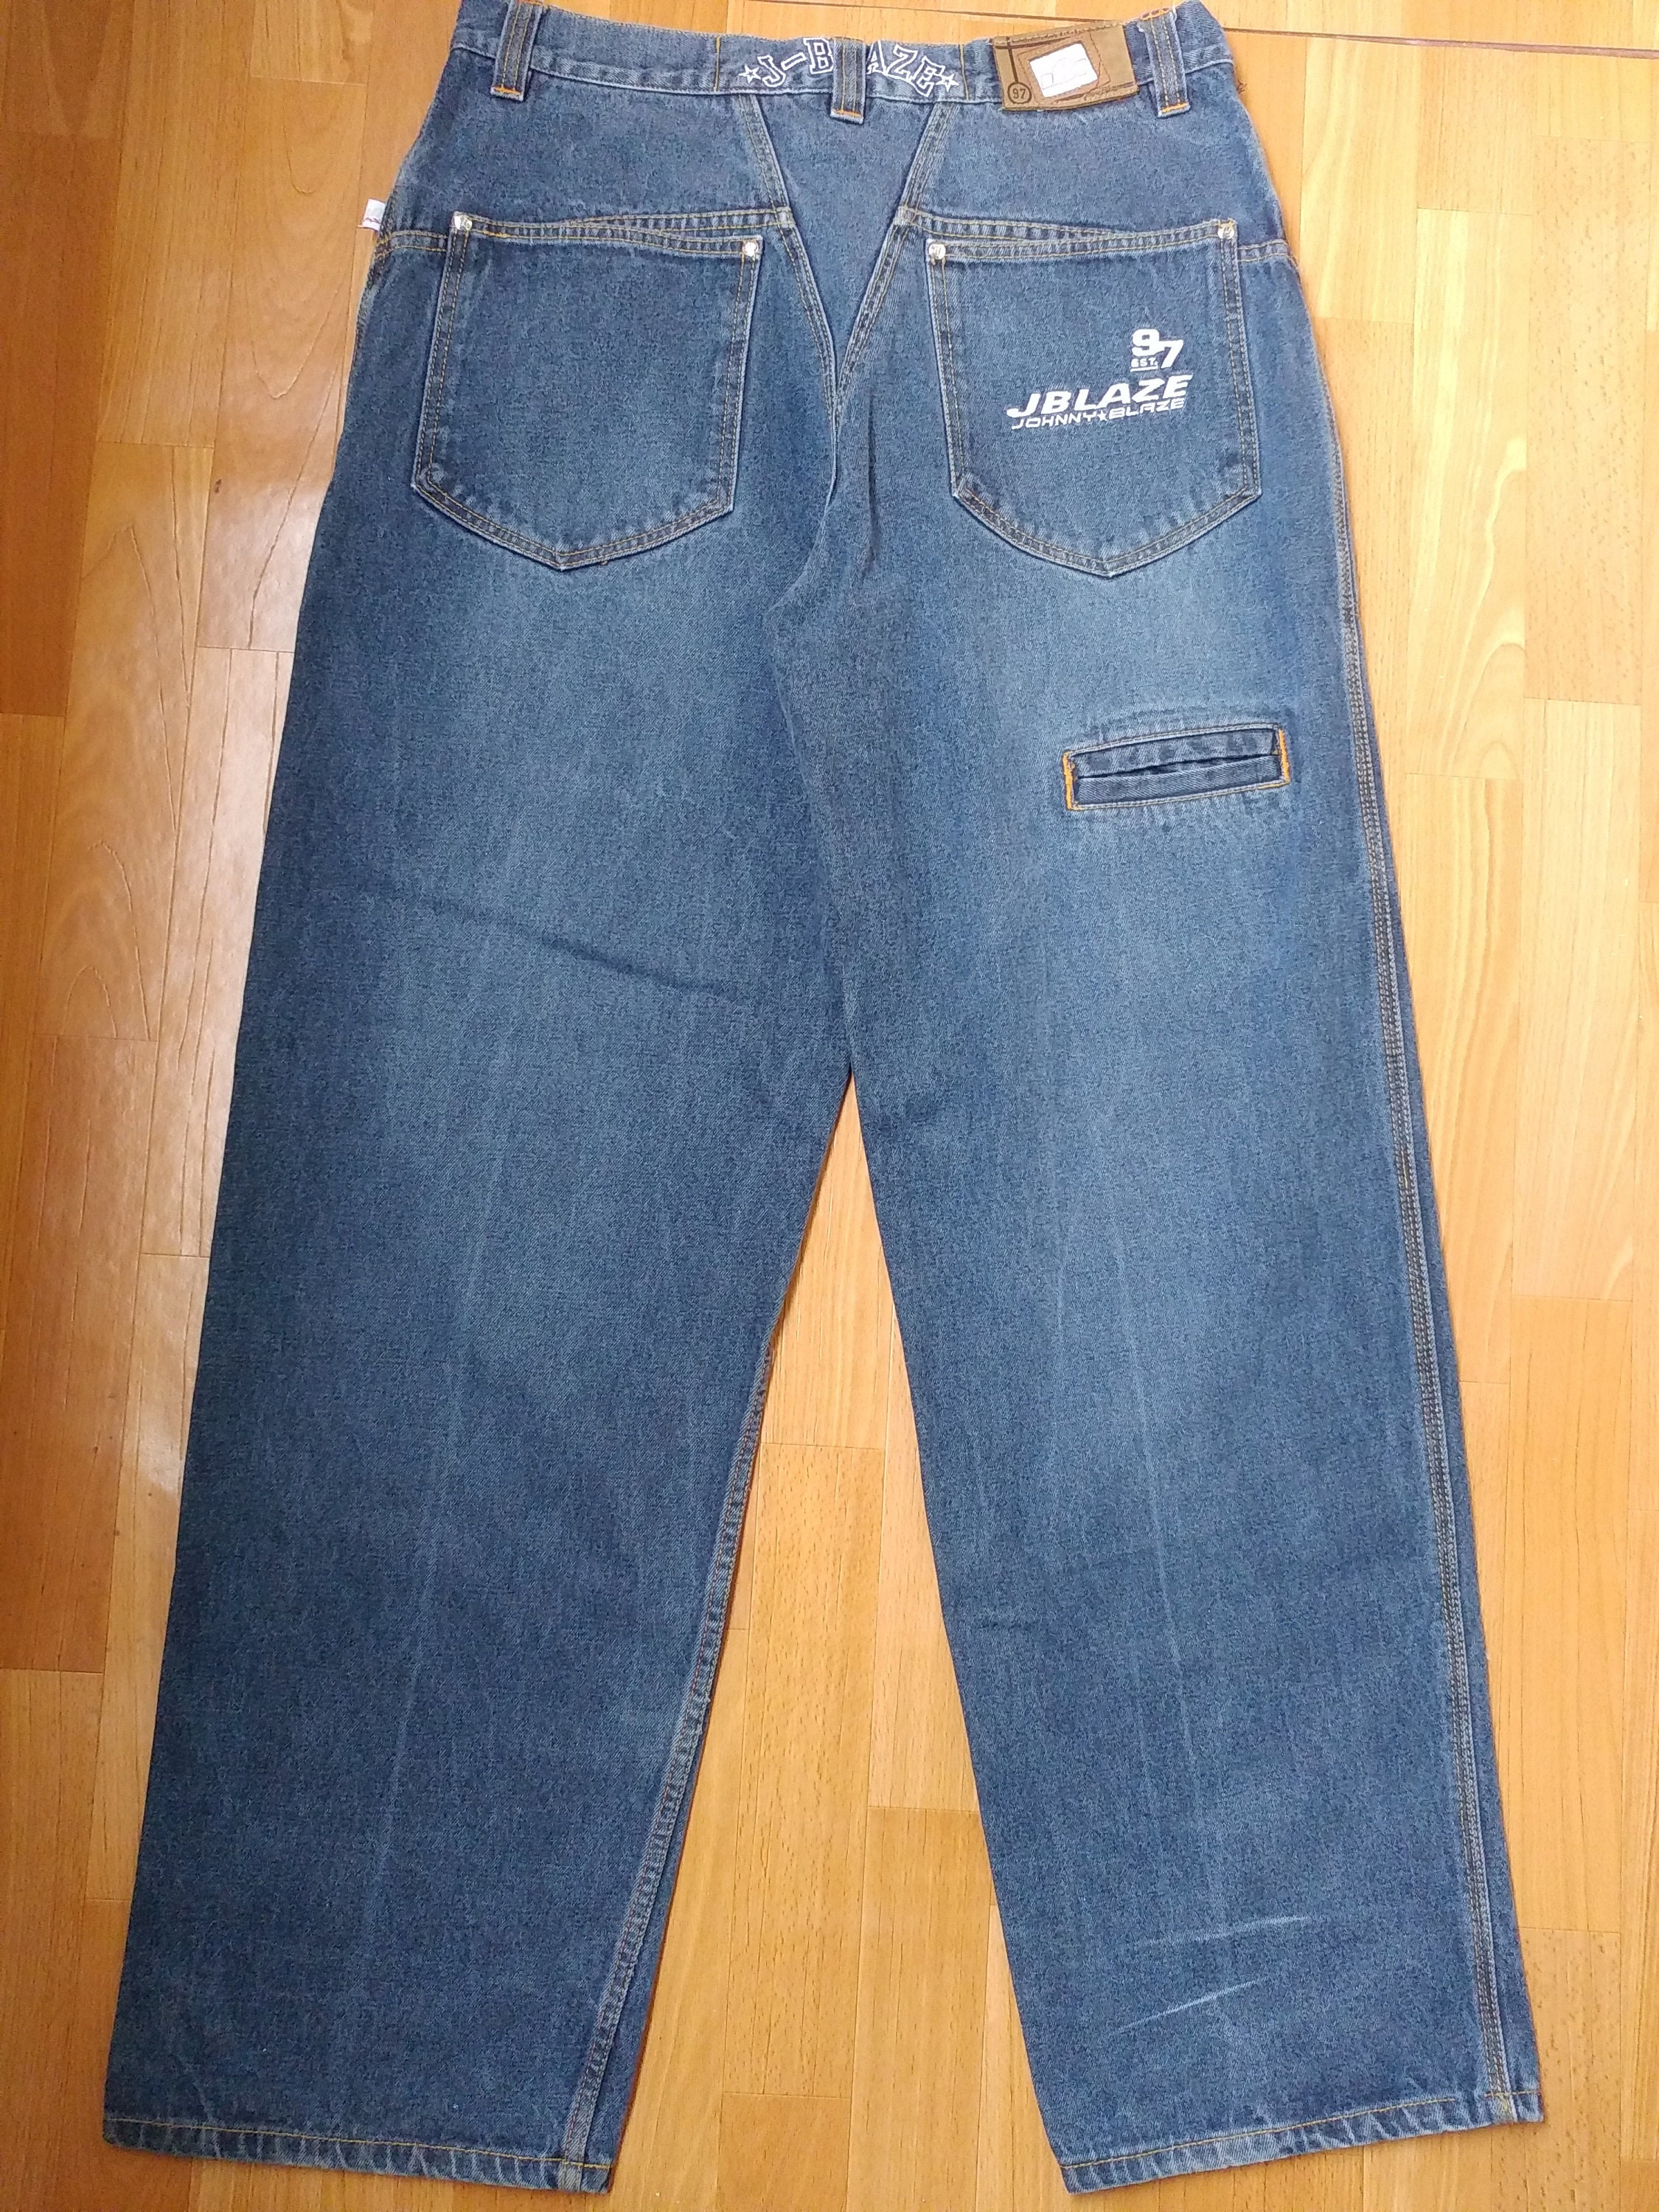 Johnny Blaze jeans old school Wu Wear pants vintage hip hop | Etsy